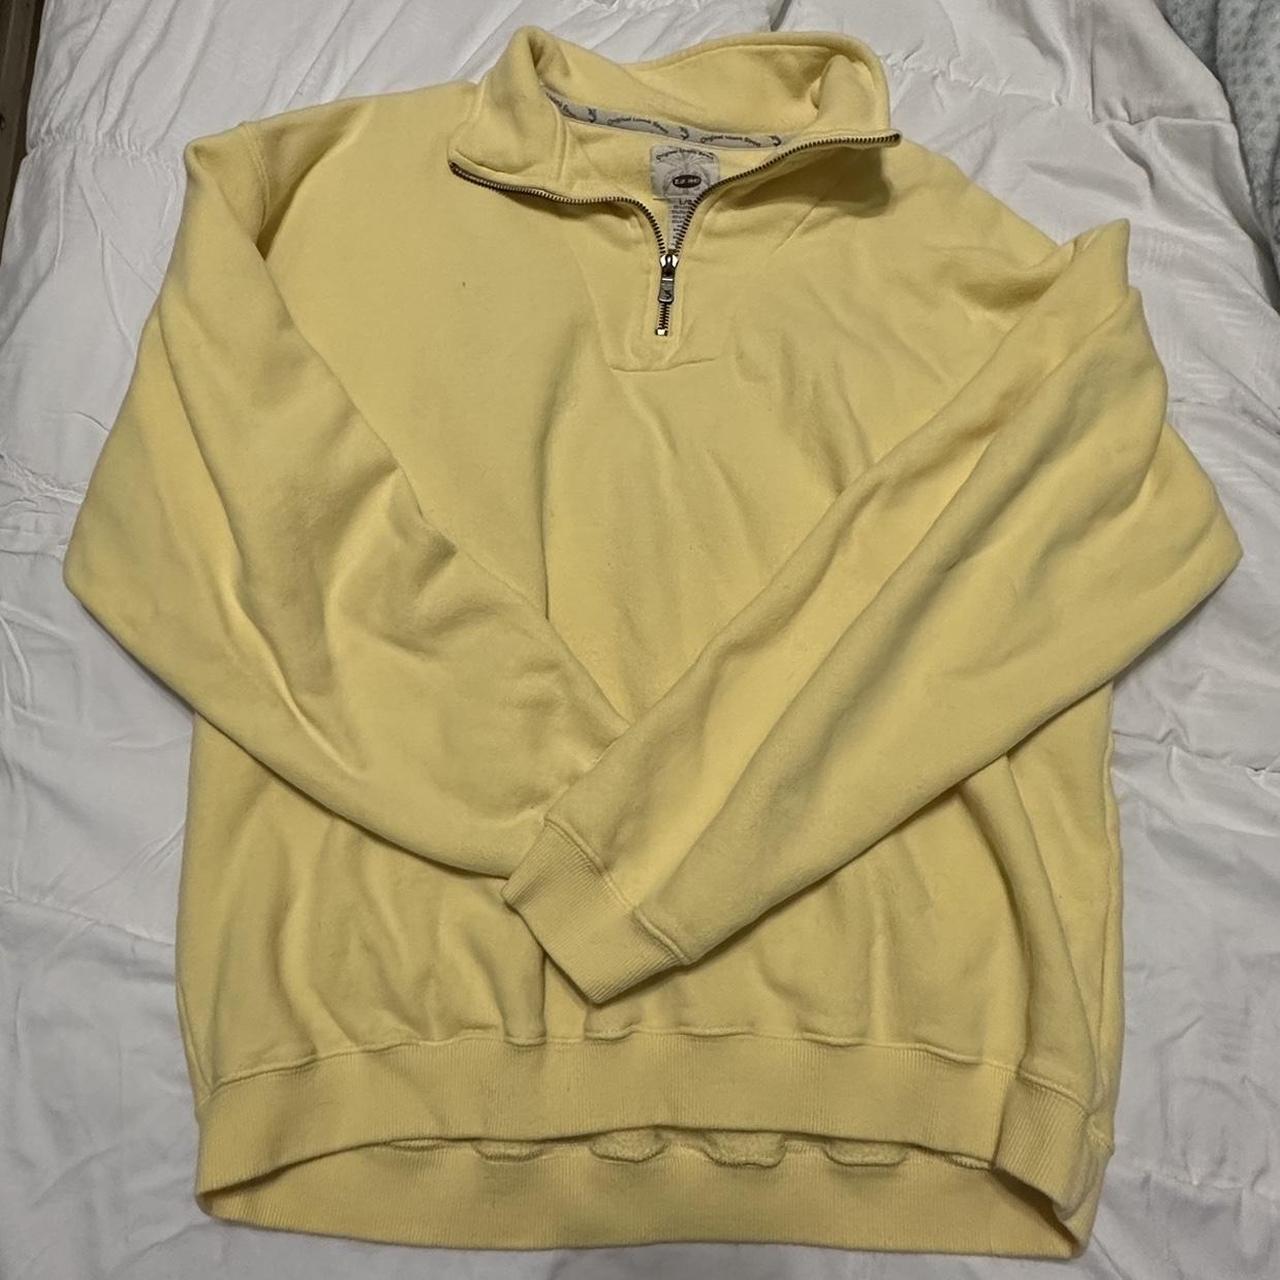 Very cute yellow quarter zip sweatshirt! i can see... - Depop